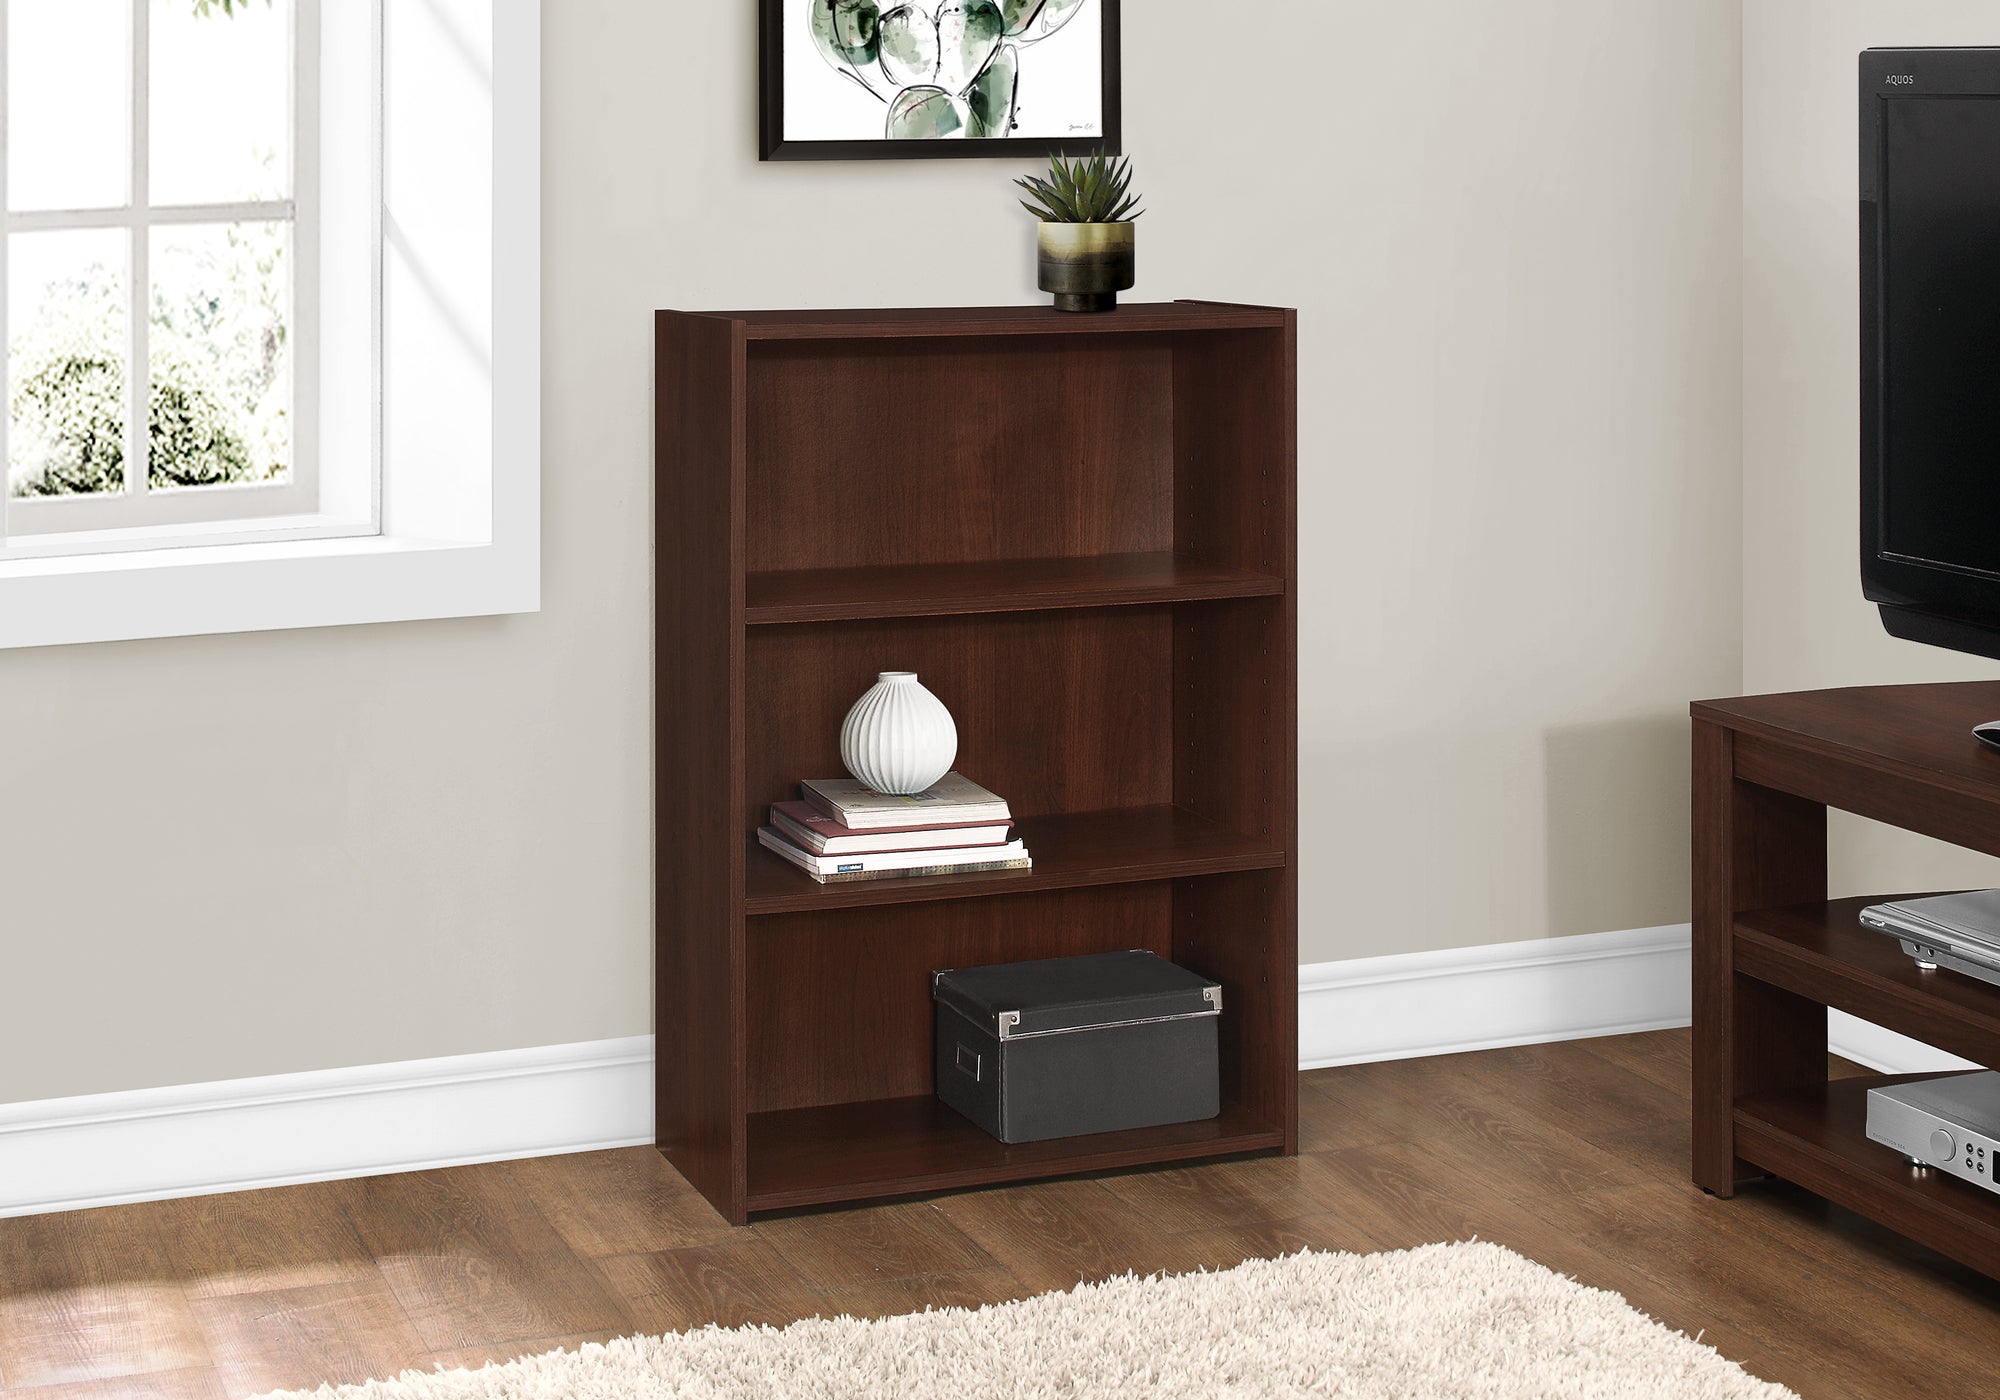 MN-327475    Bookshelf, Bookcase, 4 Tier, 36"H, Office, Bedroom, Laminate, Cherry, Contemporary, Modern, Transitional